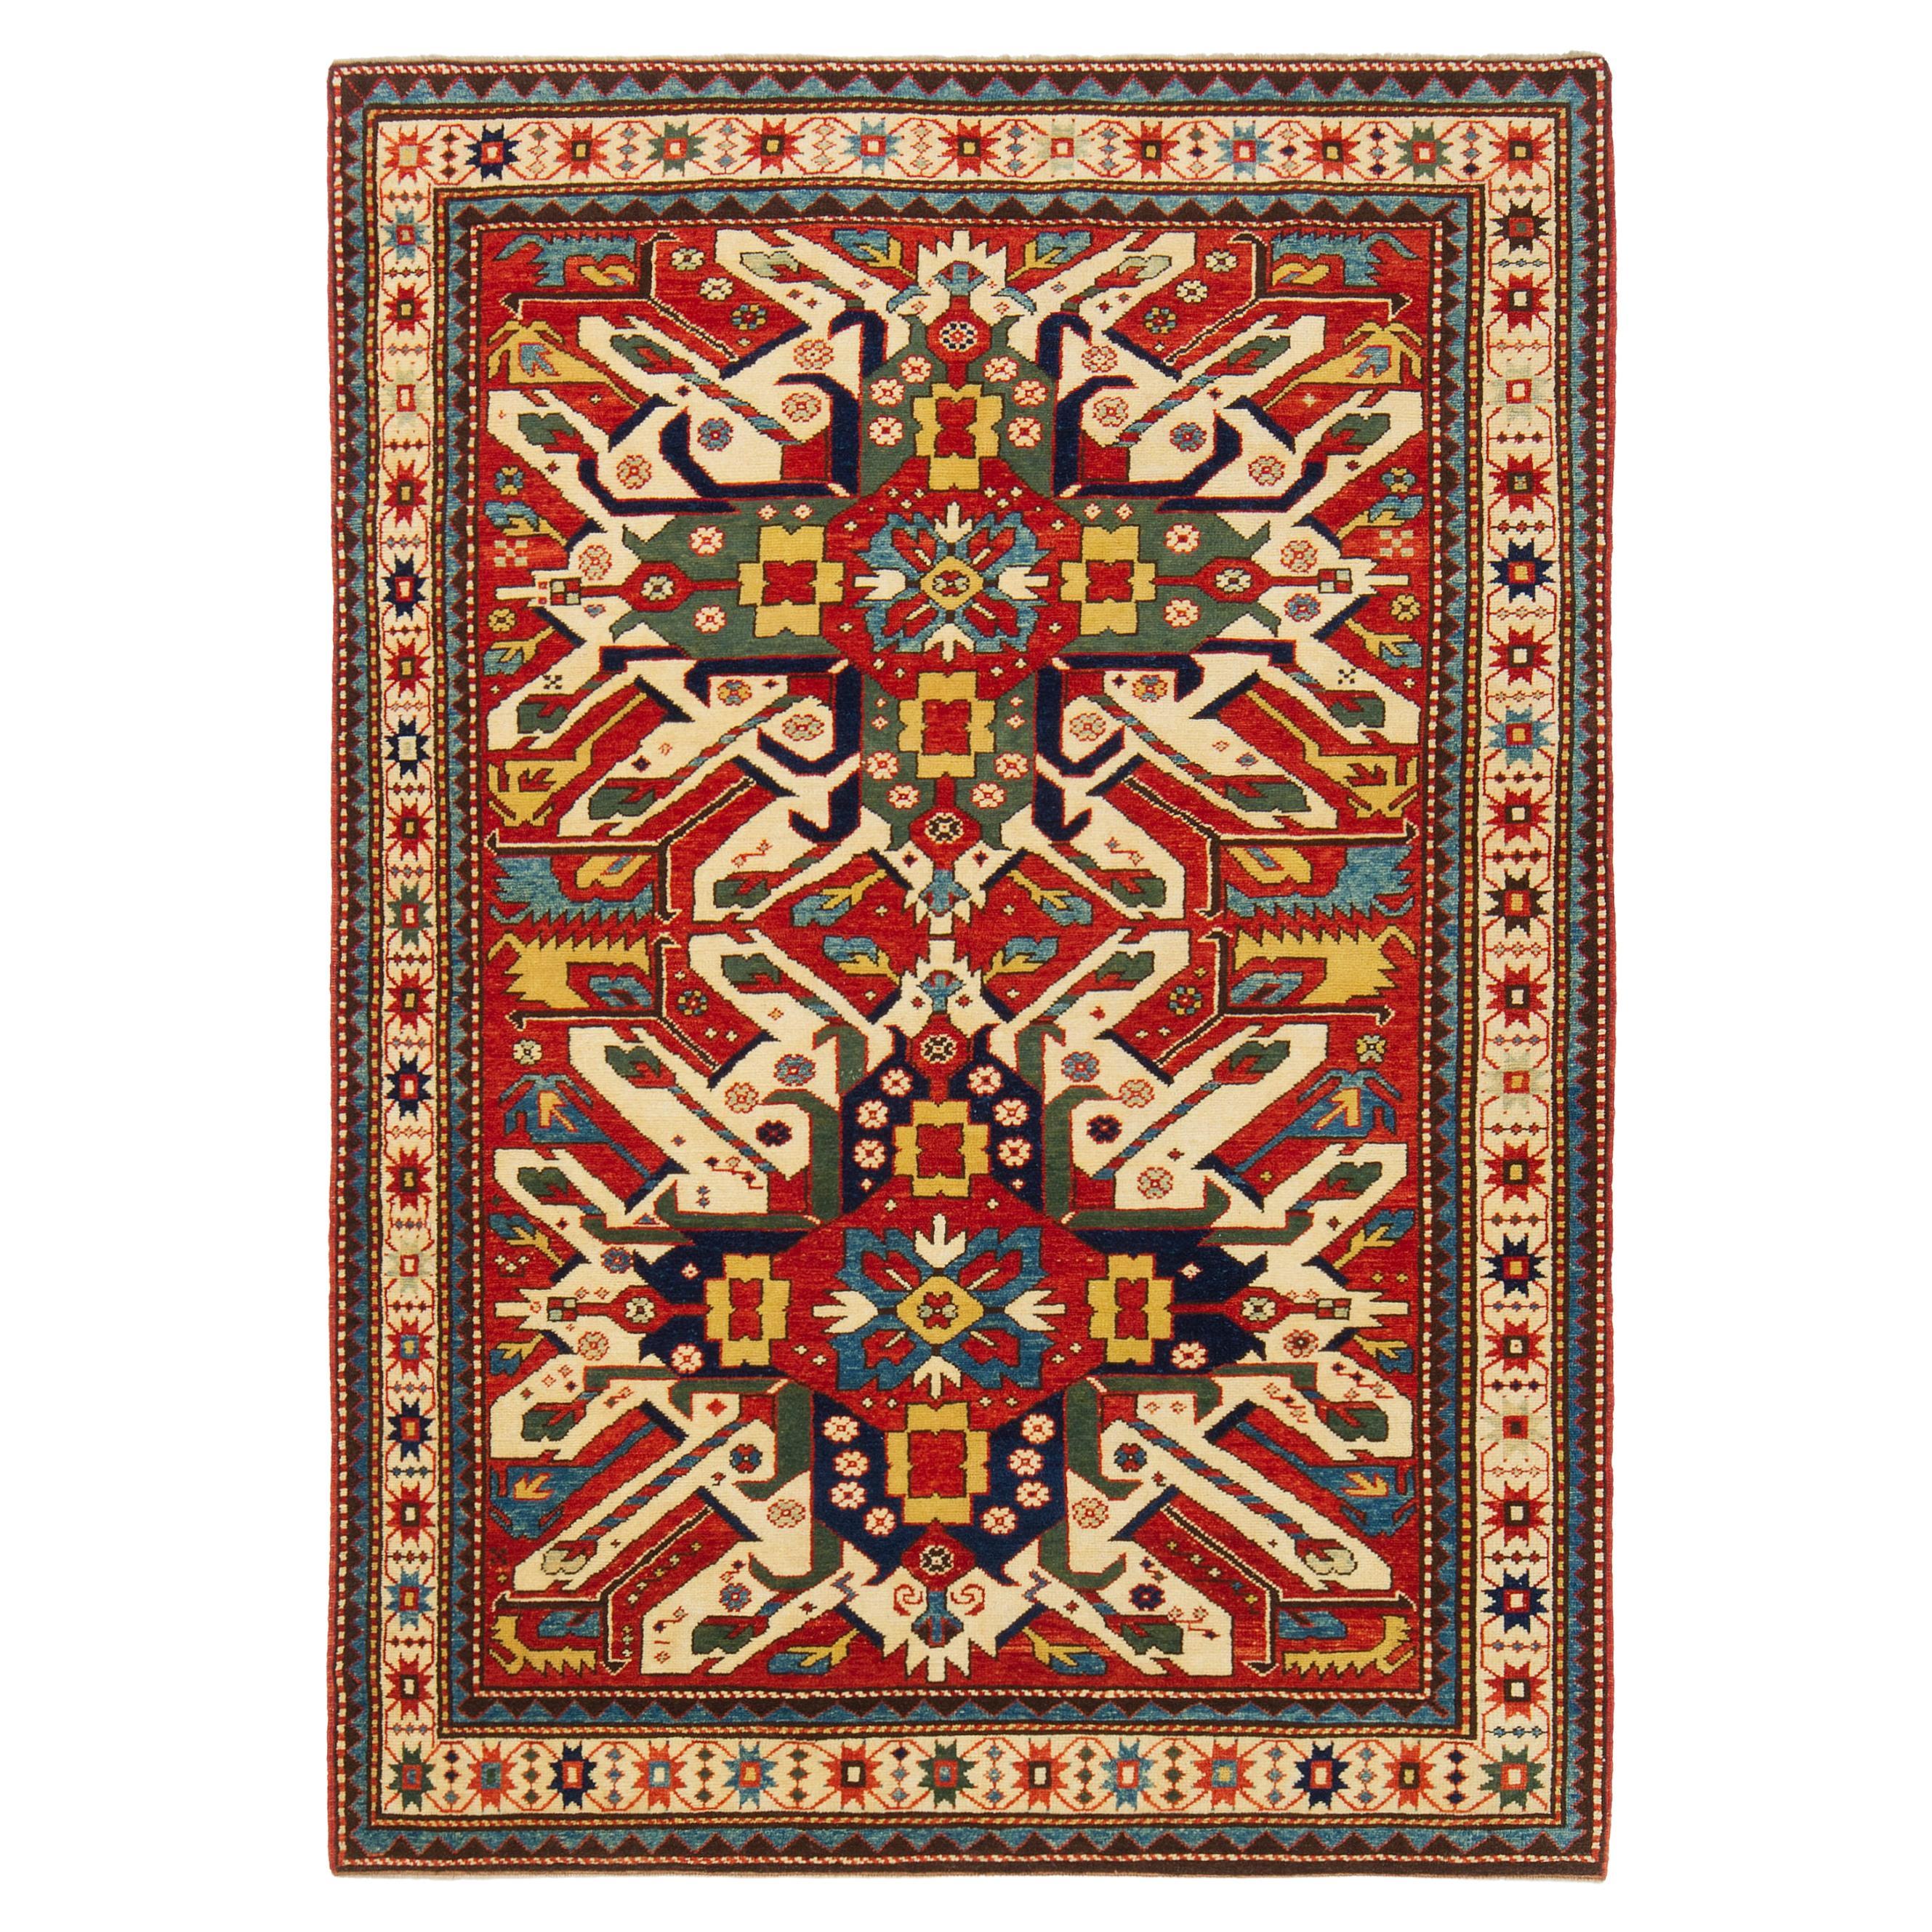 Ararat Rugs Chelaberd Karabakh Rug Antique Caucasian Revival Carpet Natural Dyed For Sale